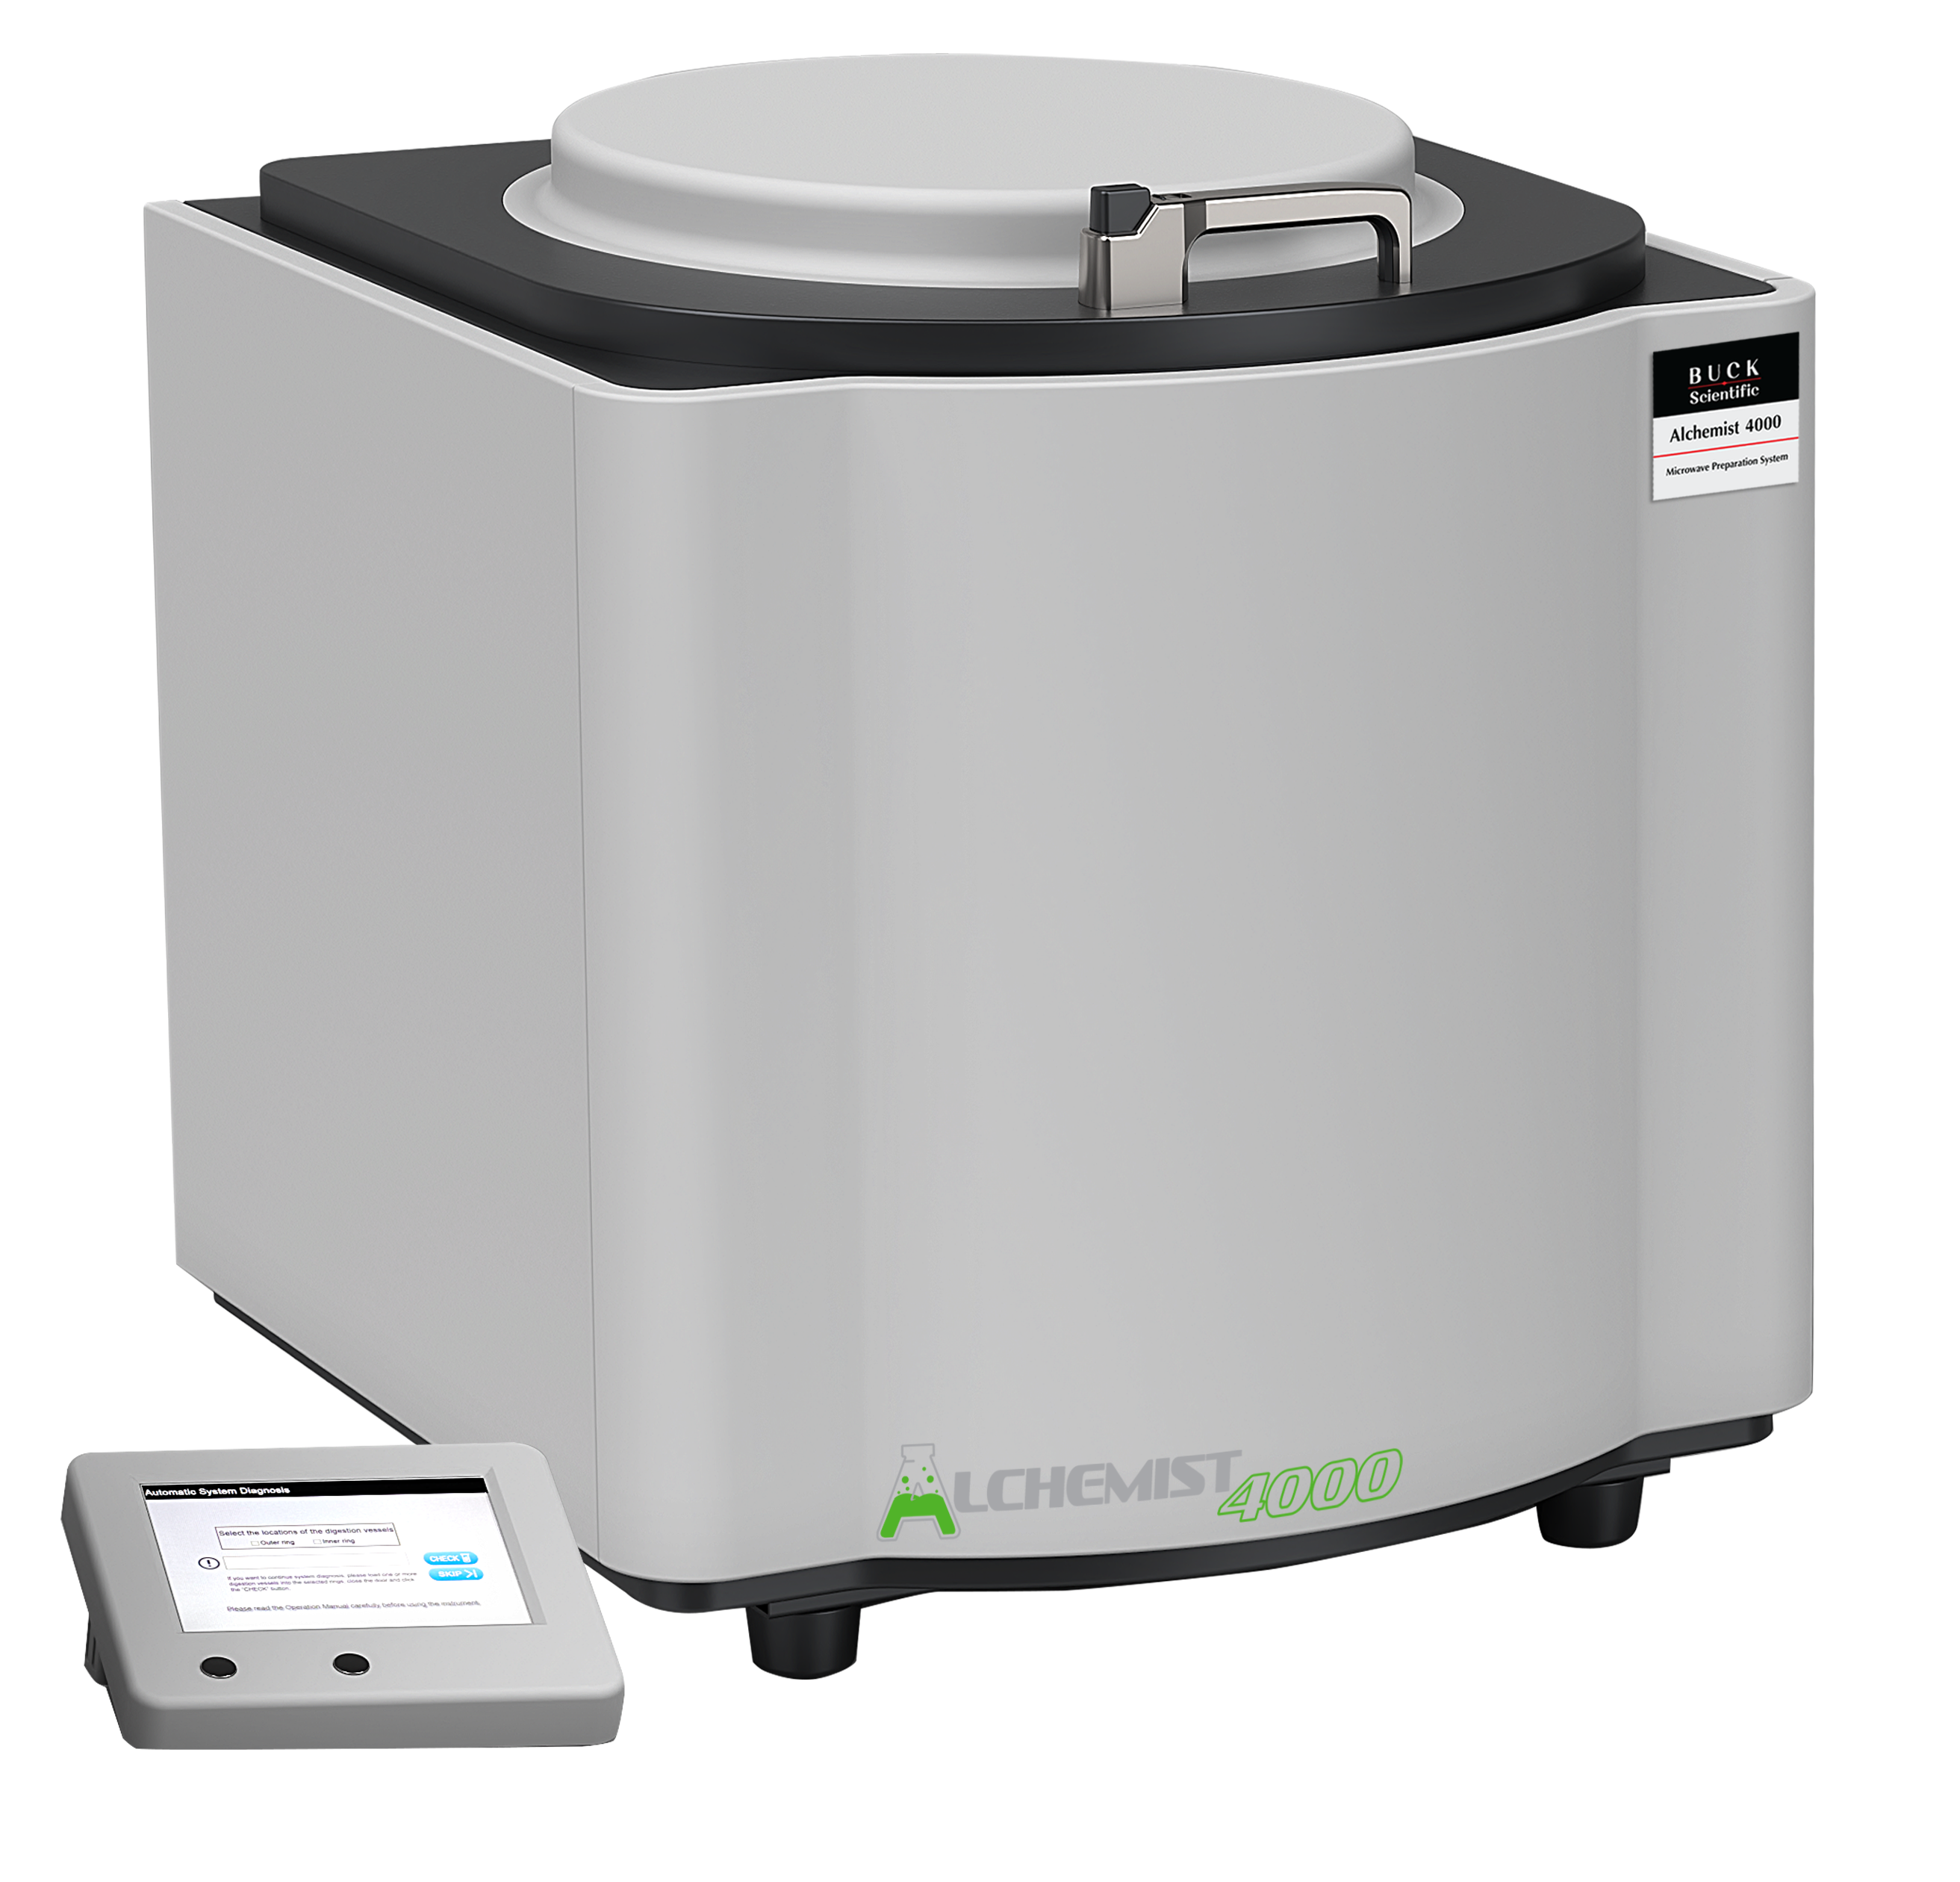 The Alchemist 4000 microwave digestion system 